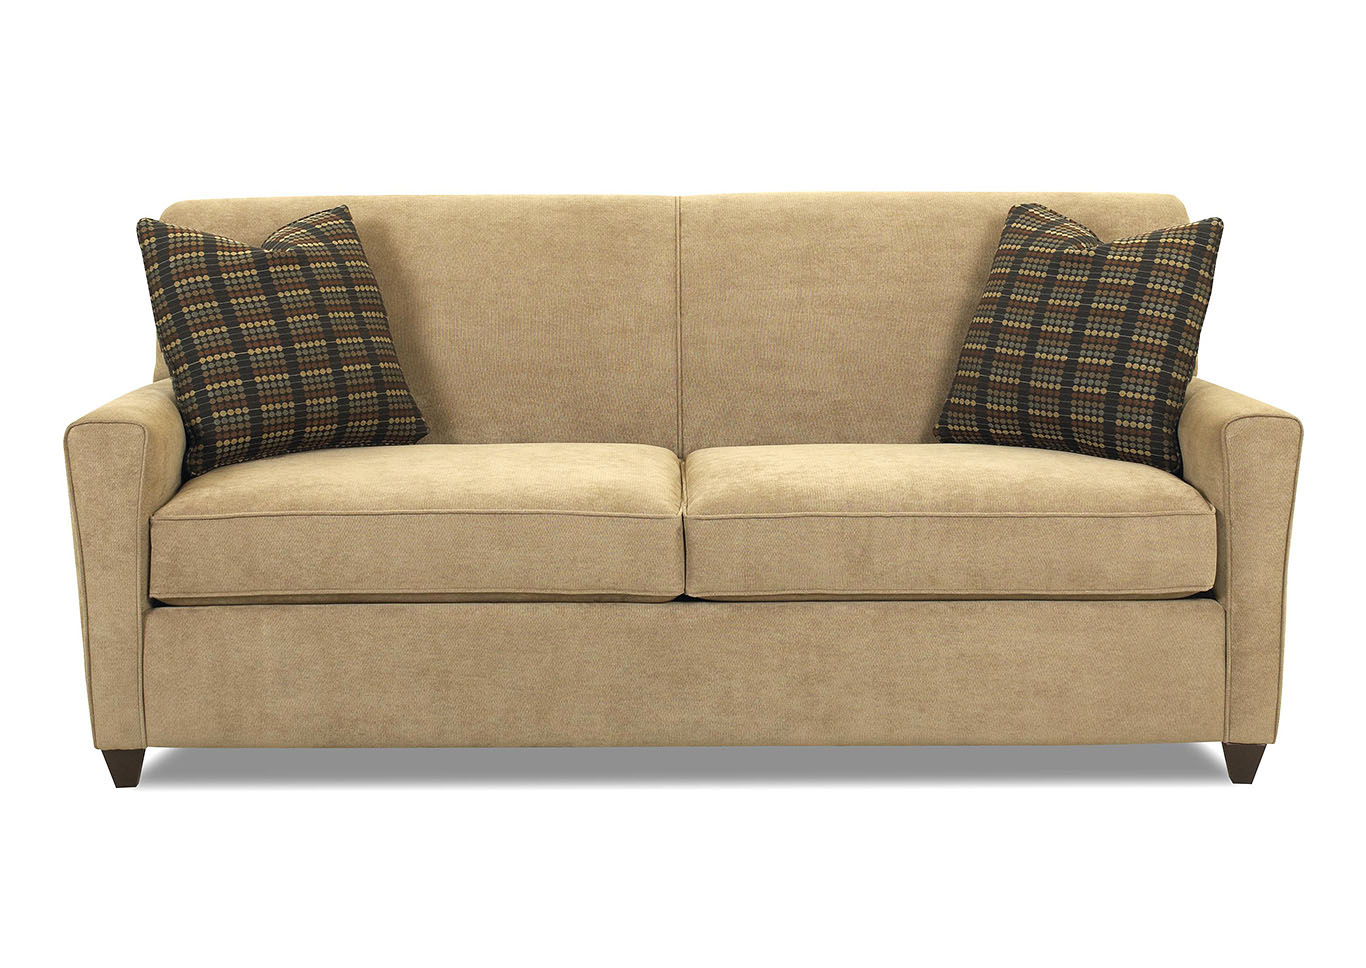 Lara Kangeroo-Brown Stationary Fabric Sofa,Klaussner Home Furnishings